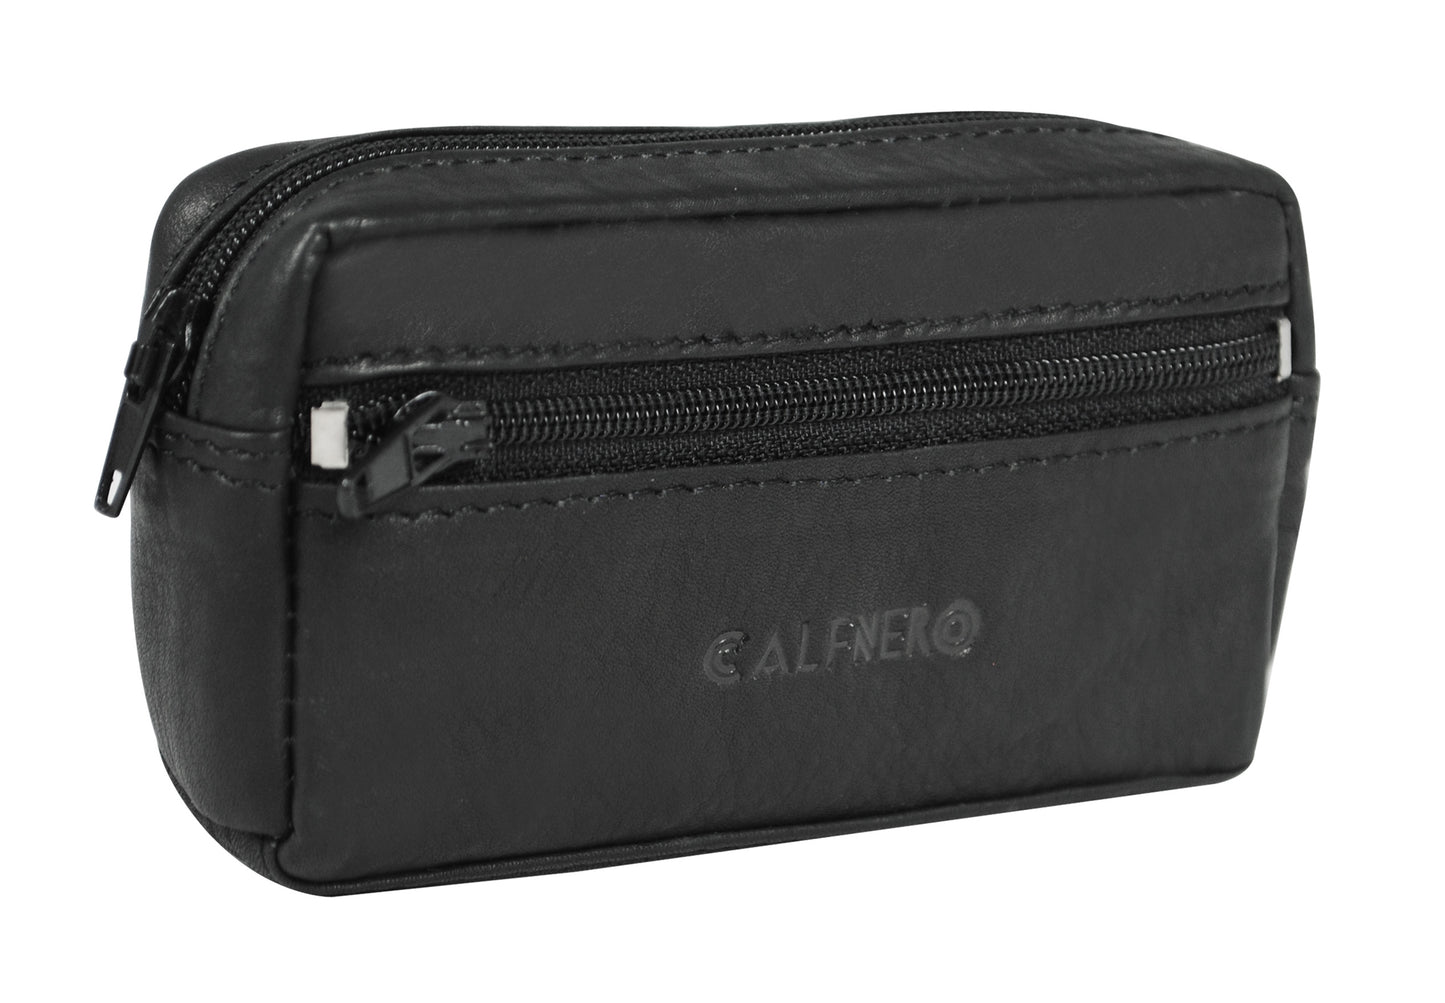 Calfnero Genuine Leather Key Case Cum Coin Wallet (S-1108-BLACK)